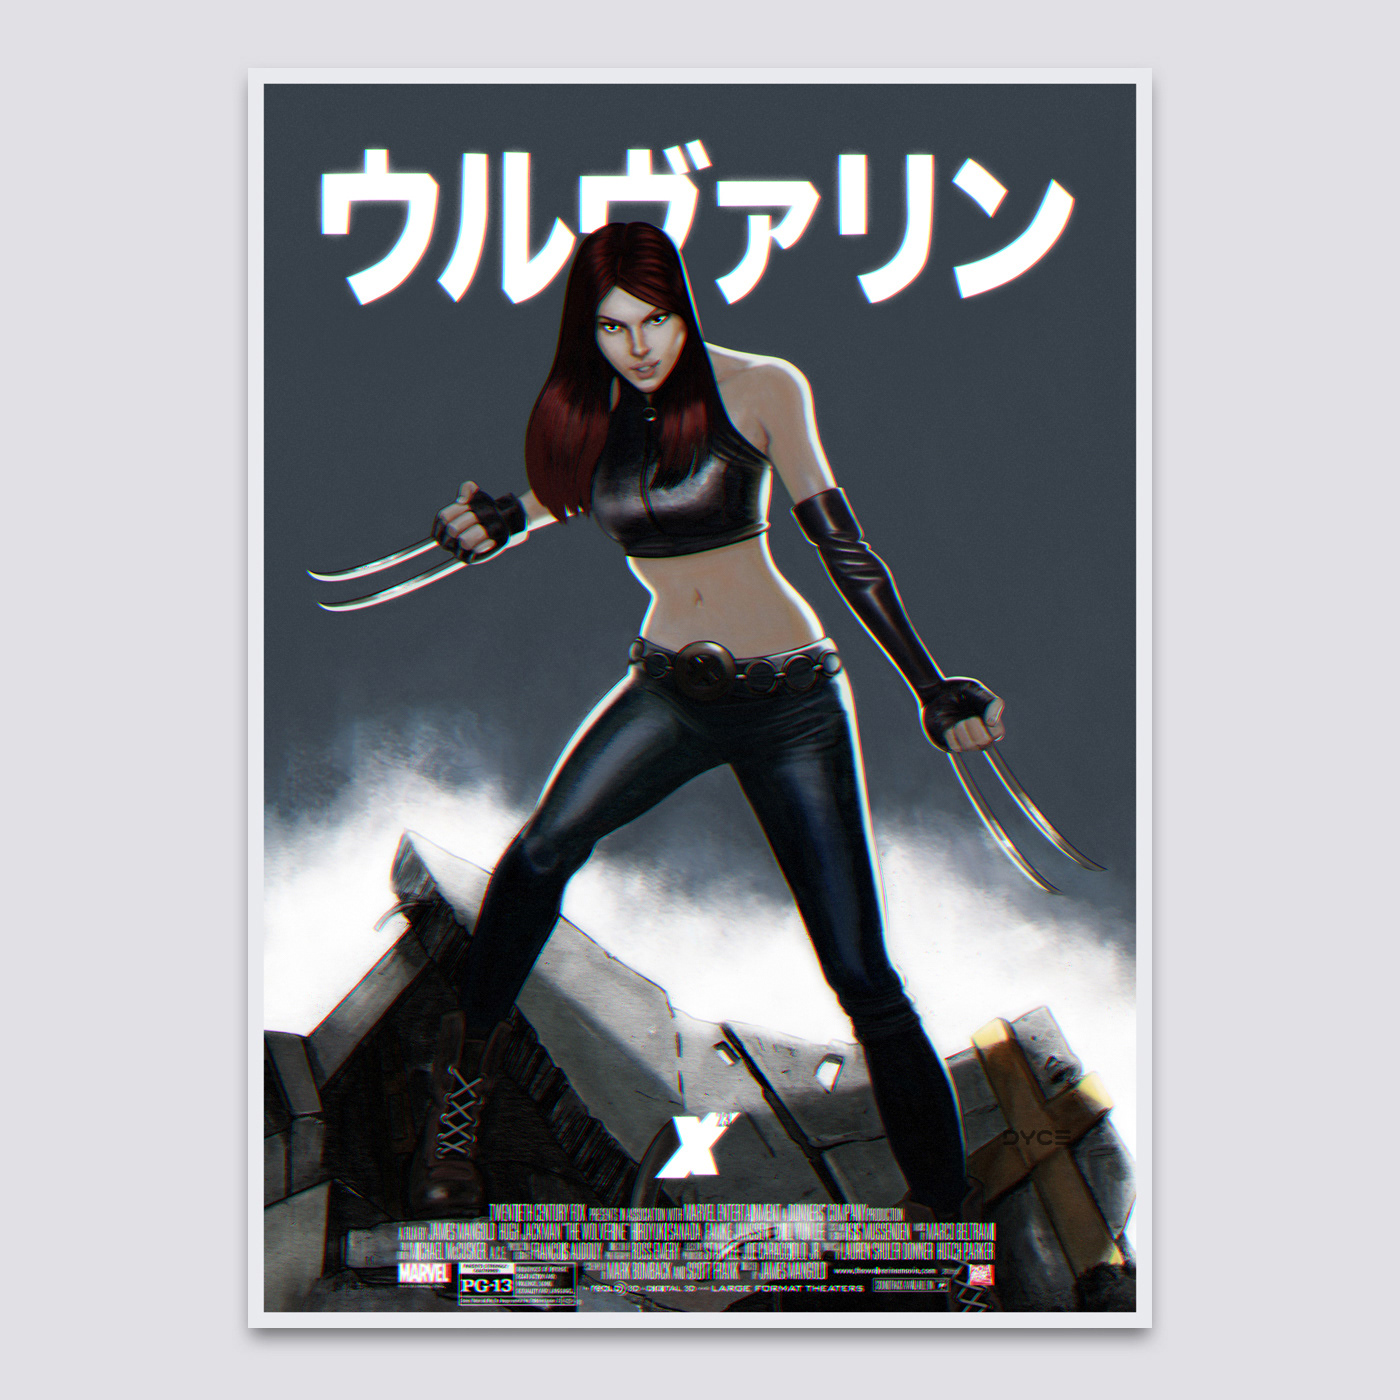 anime 2D Animation animation  animation studio anime art Anime Posters anime studio akira film posters Cyberpunk